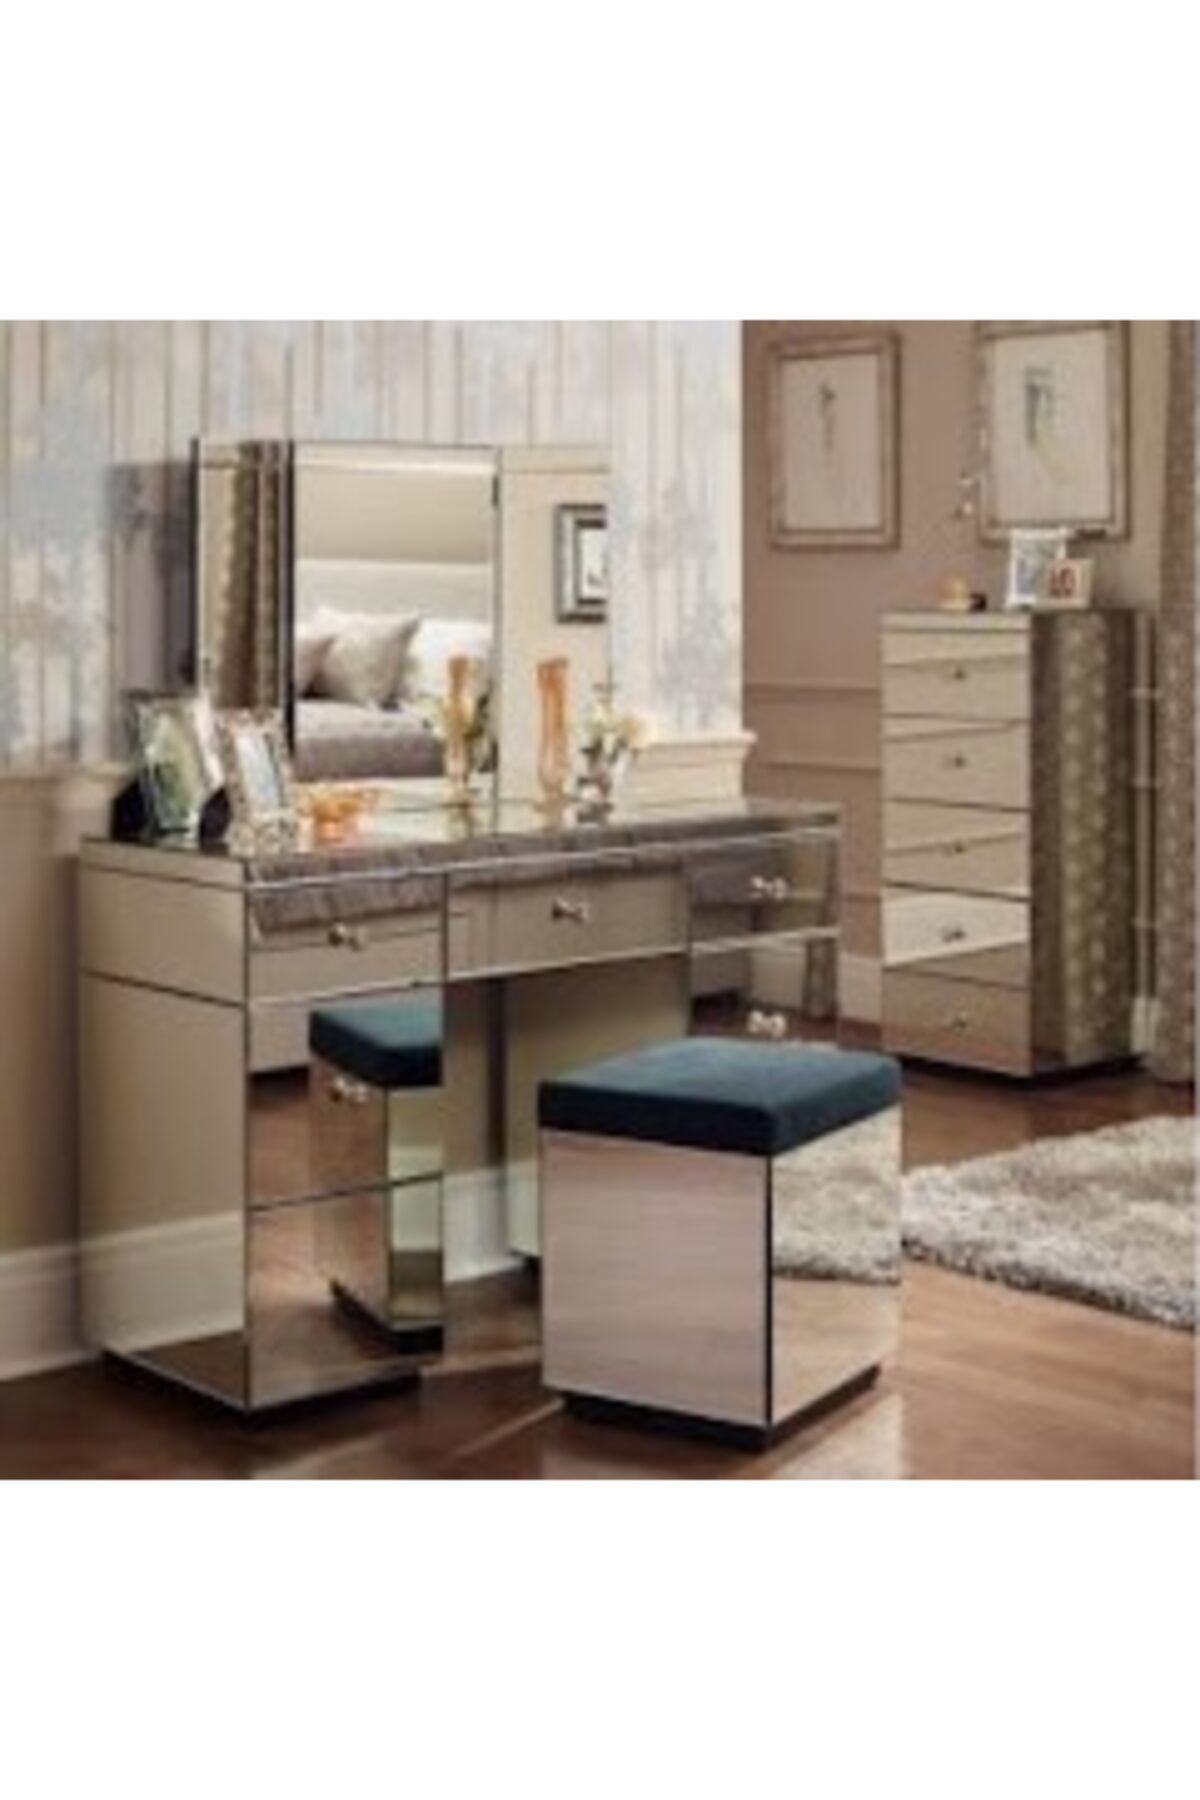 LUXURY VİLLA Luxury Makyaj Masası 4 Lü Set Makyaj Masası Aynası Puf Çamaşırlık